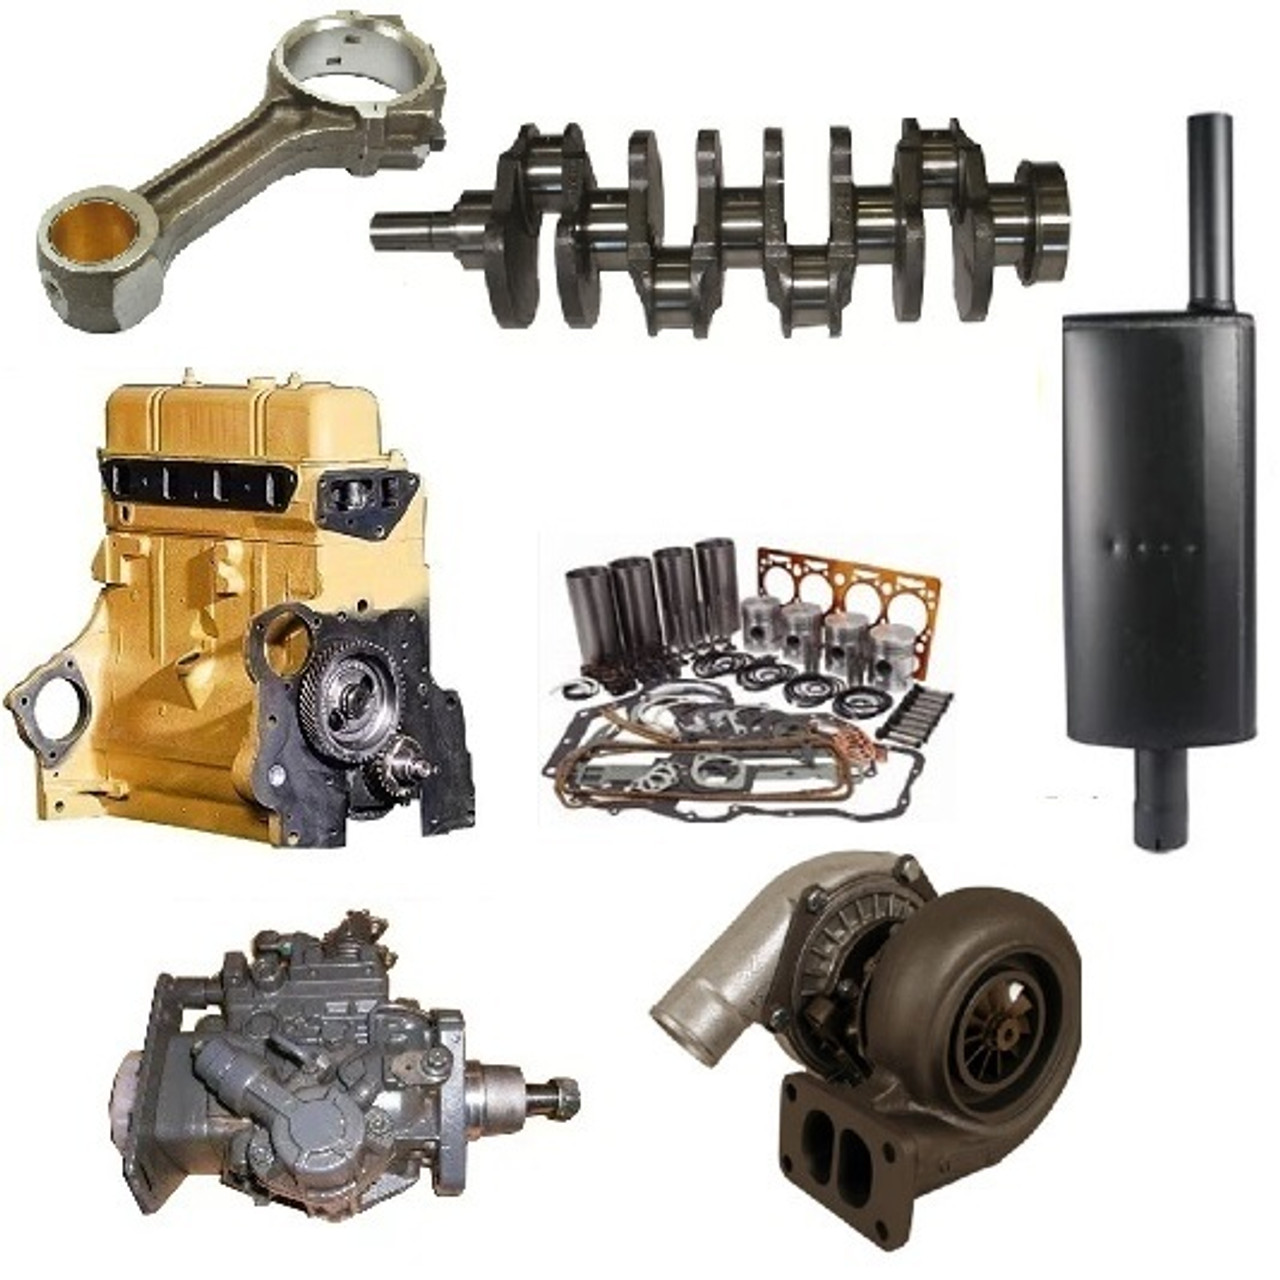 John Deere Dozer Engine and Fuel System